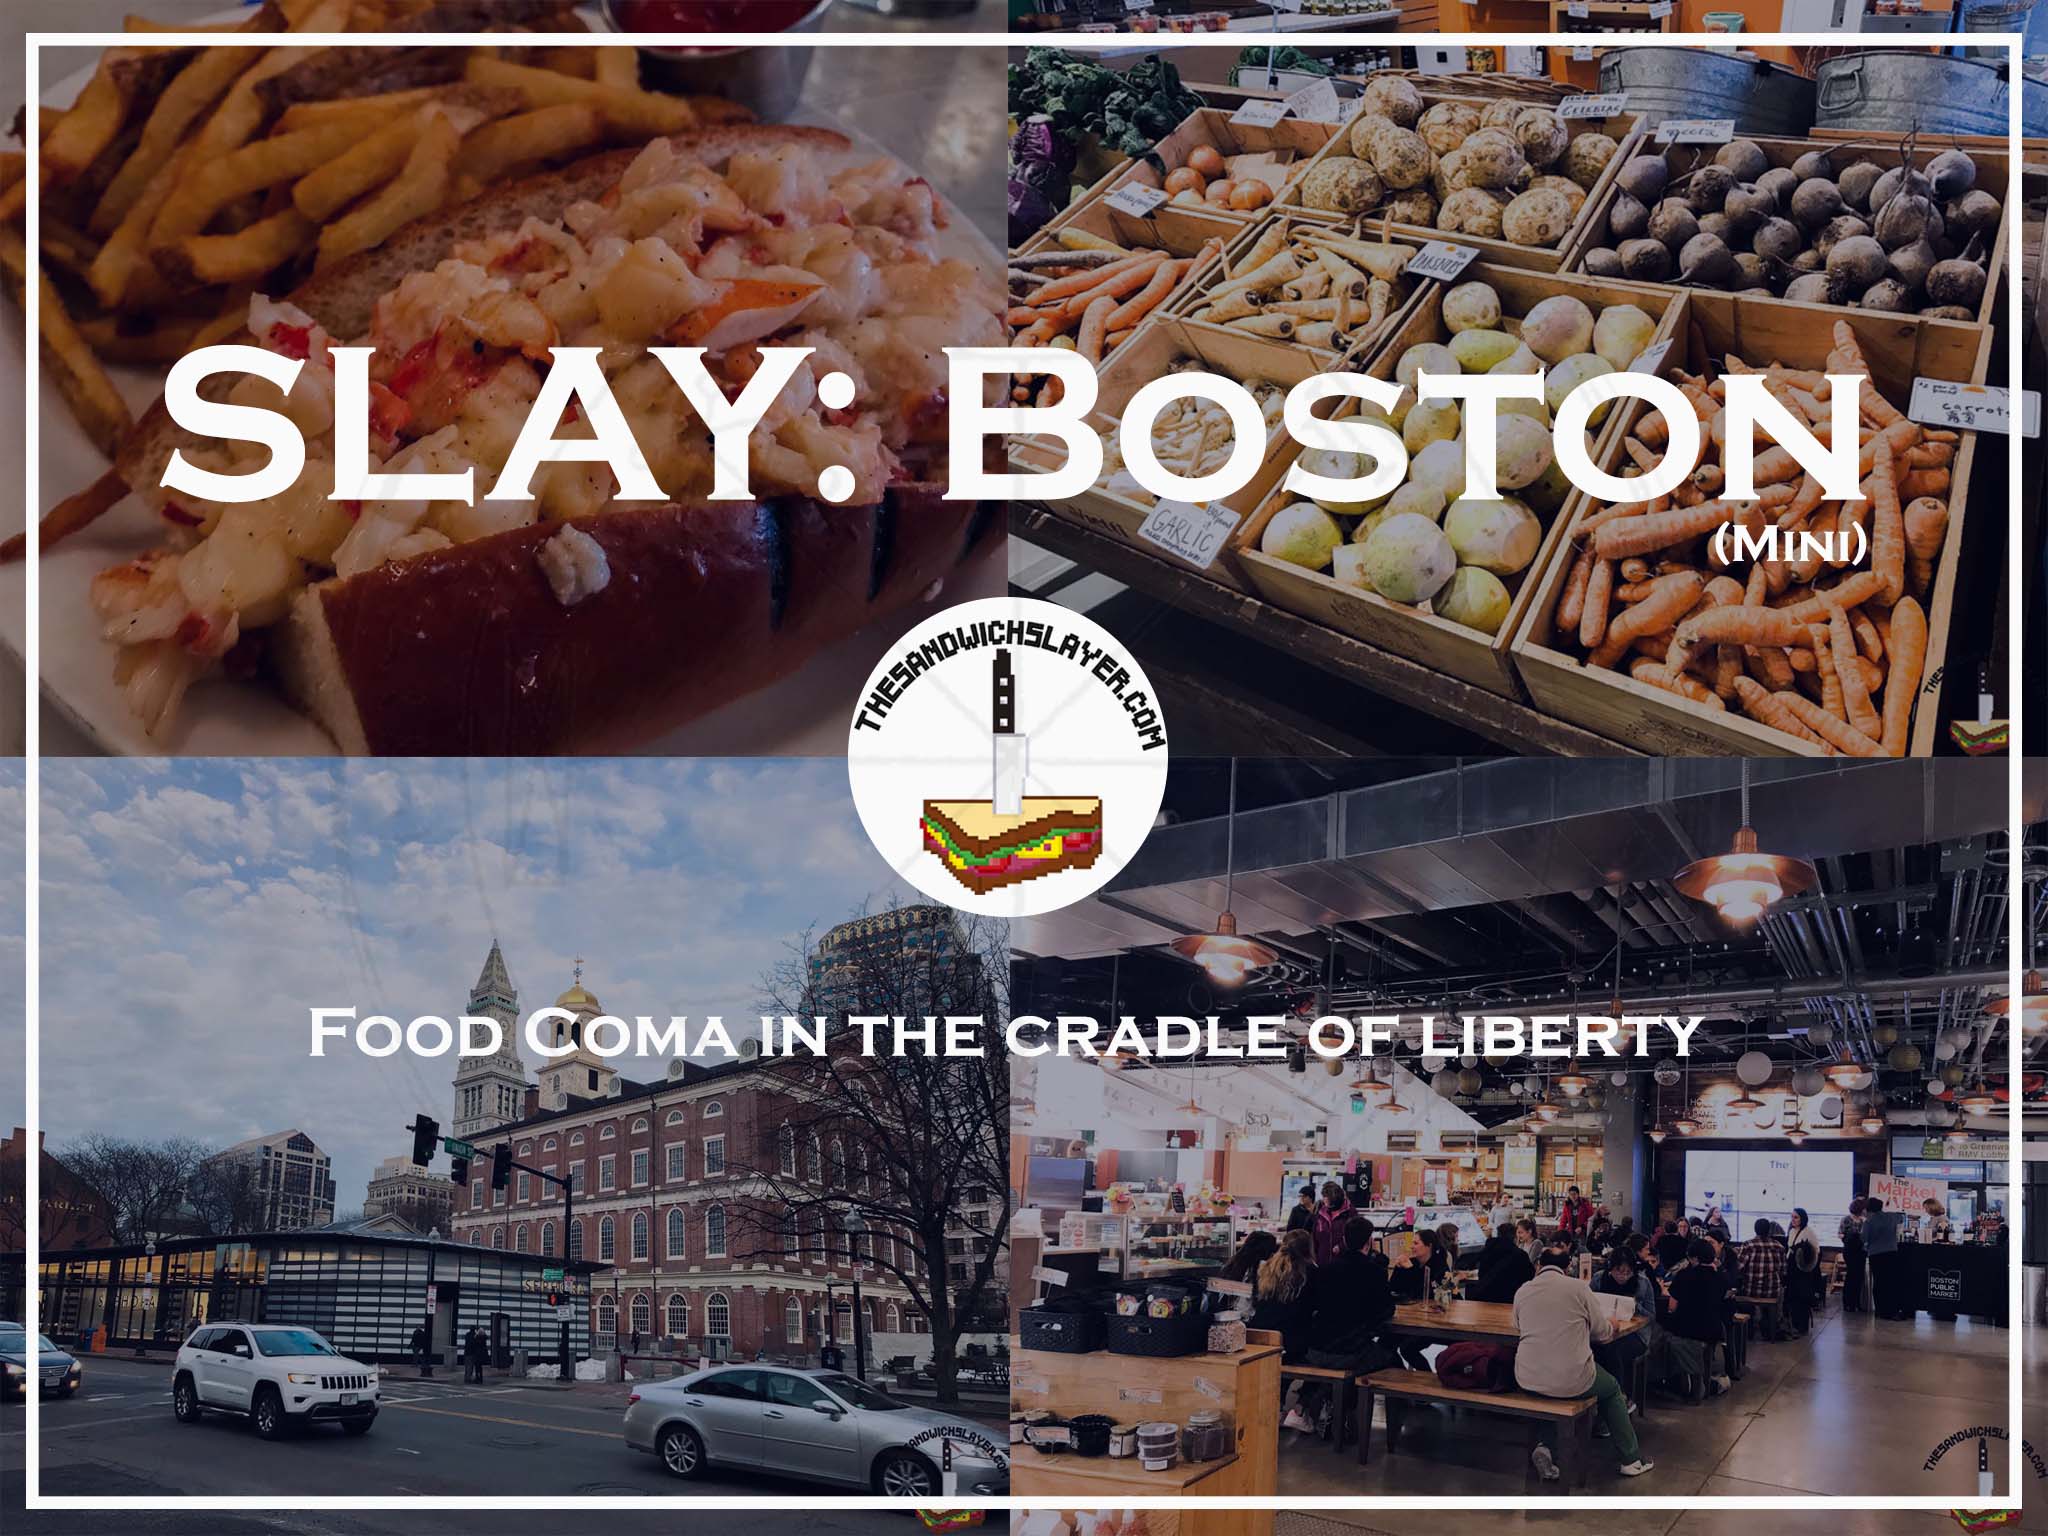 Slay: Boston